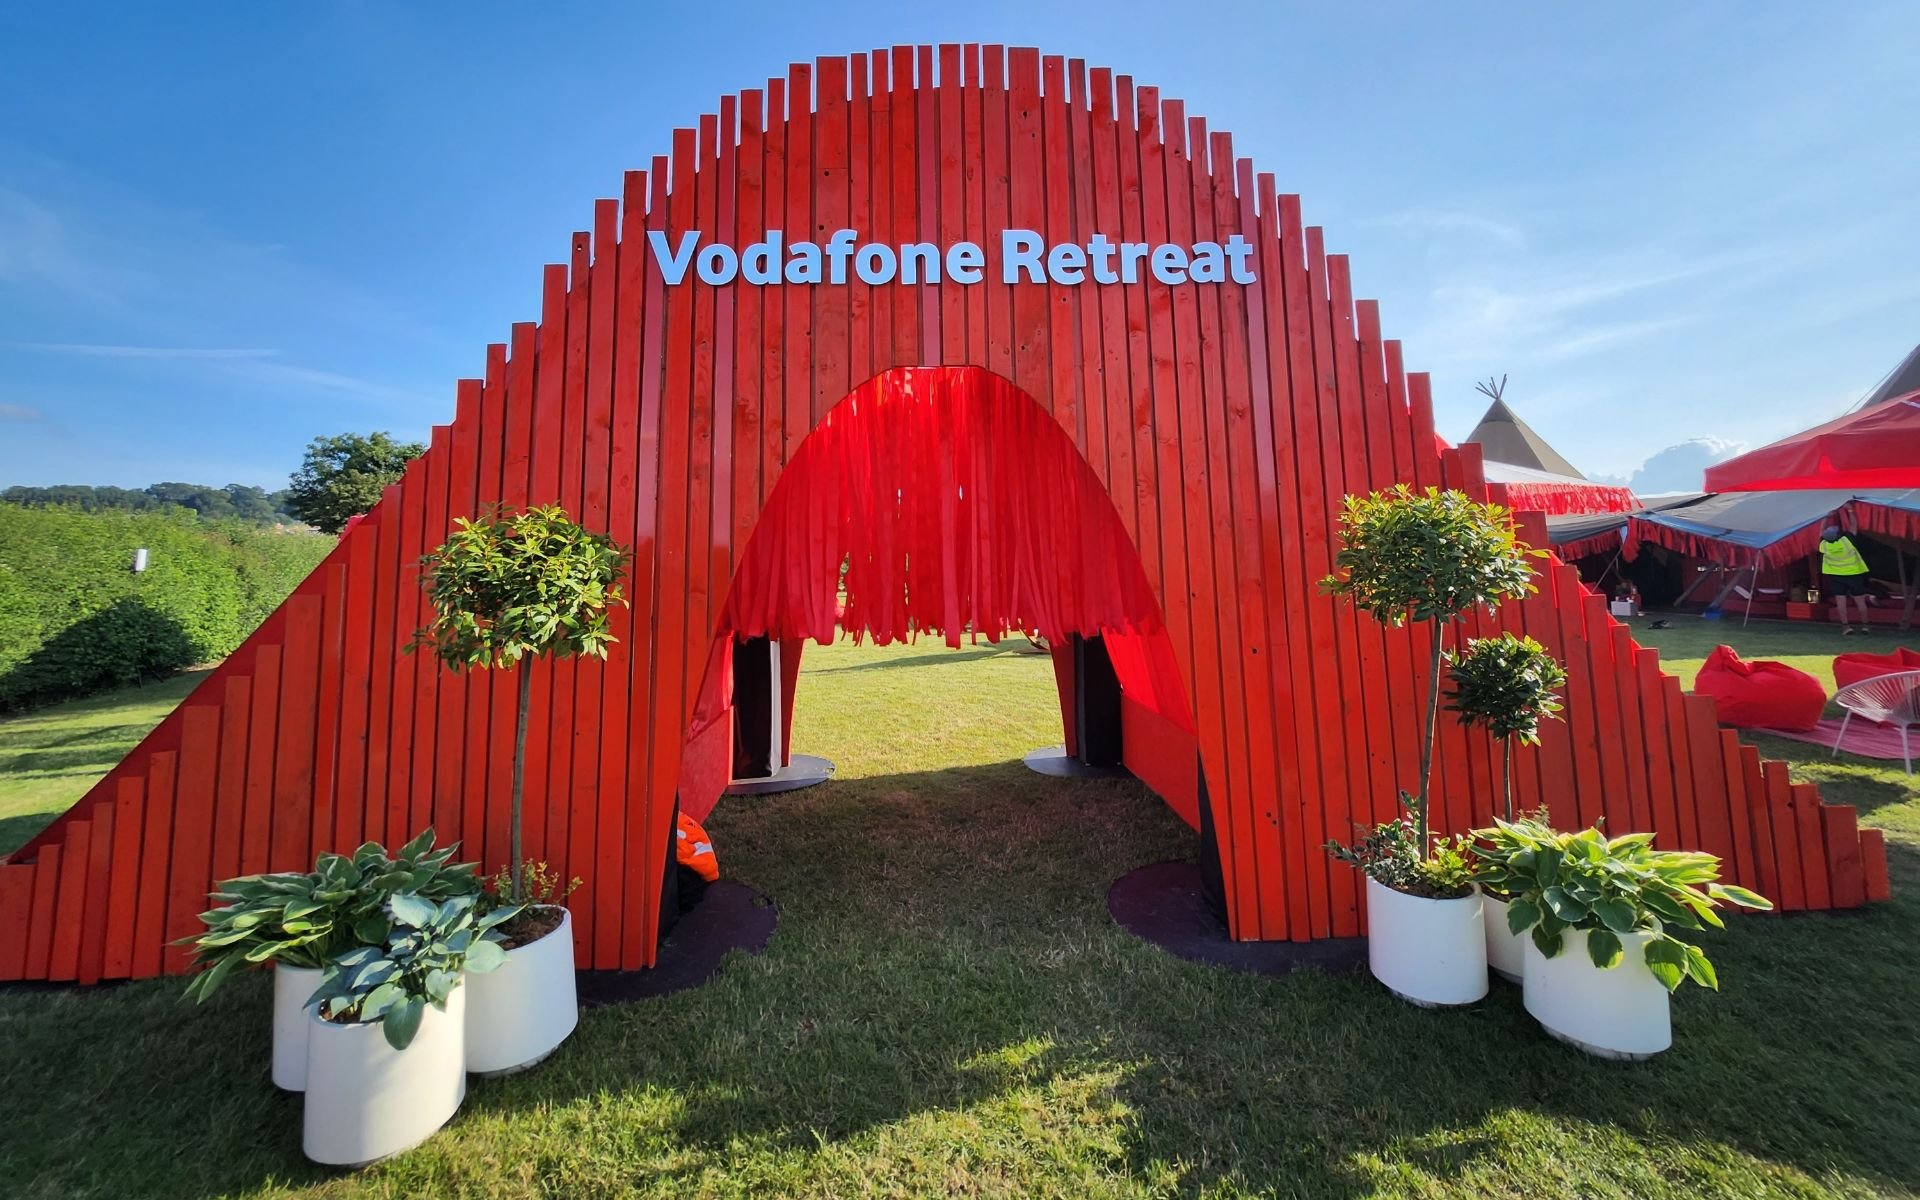 Vodafone Retreat at Glastonbury Festival